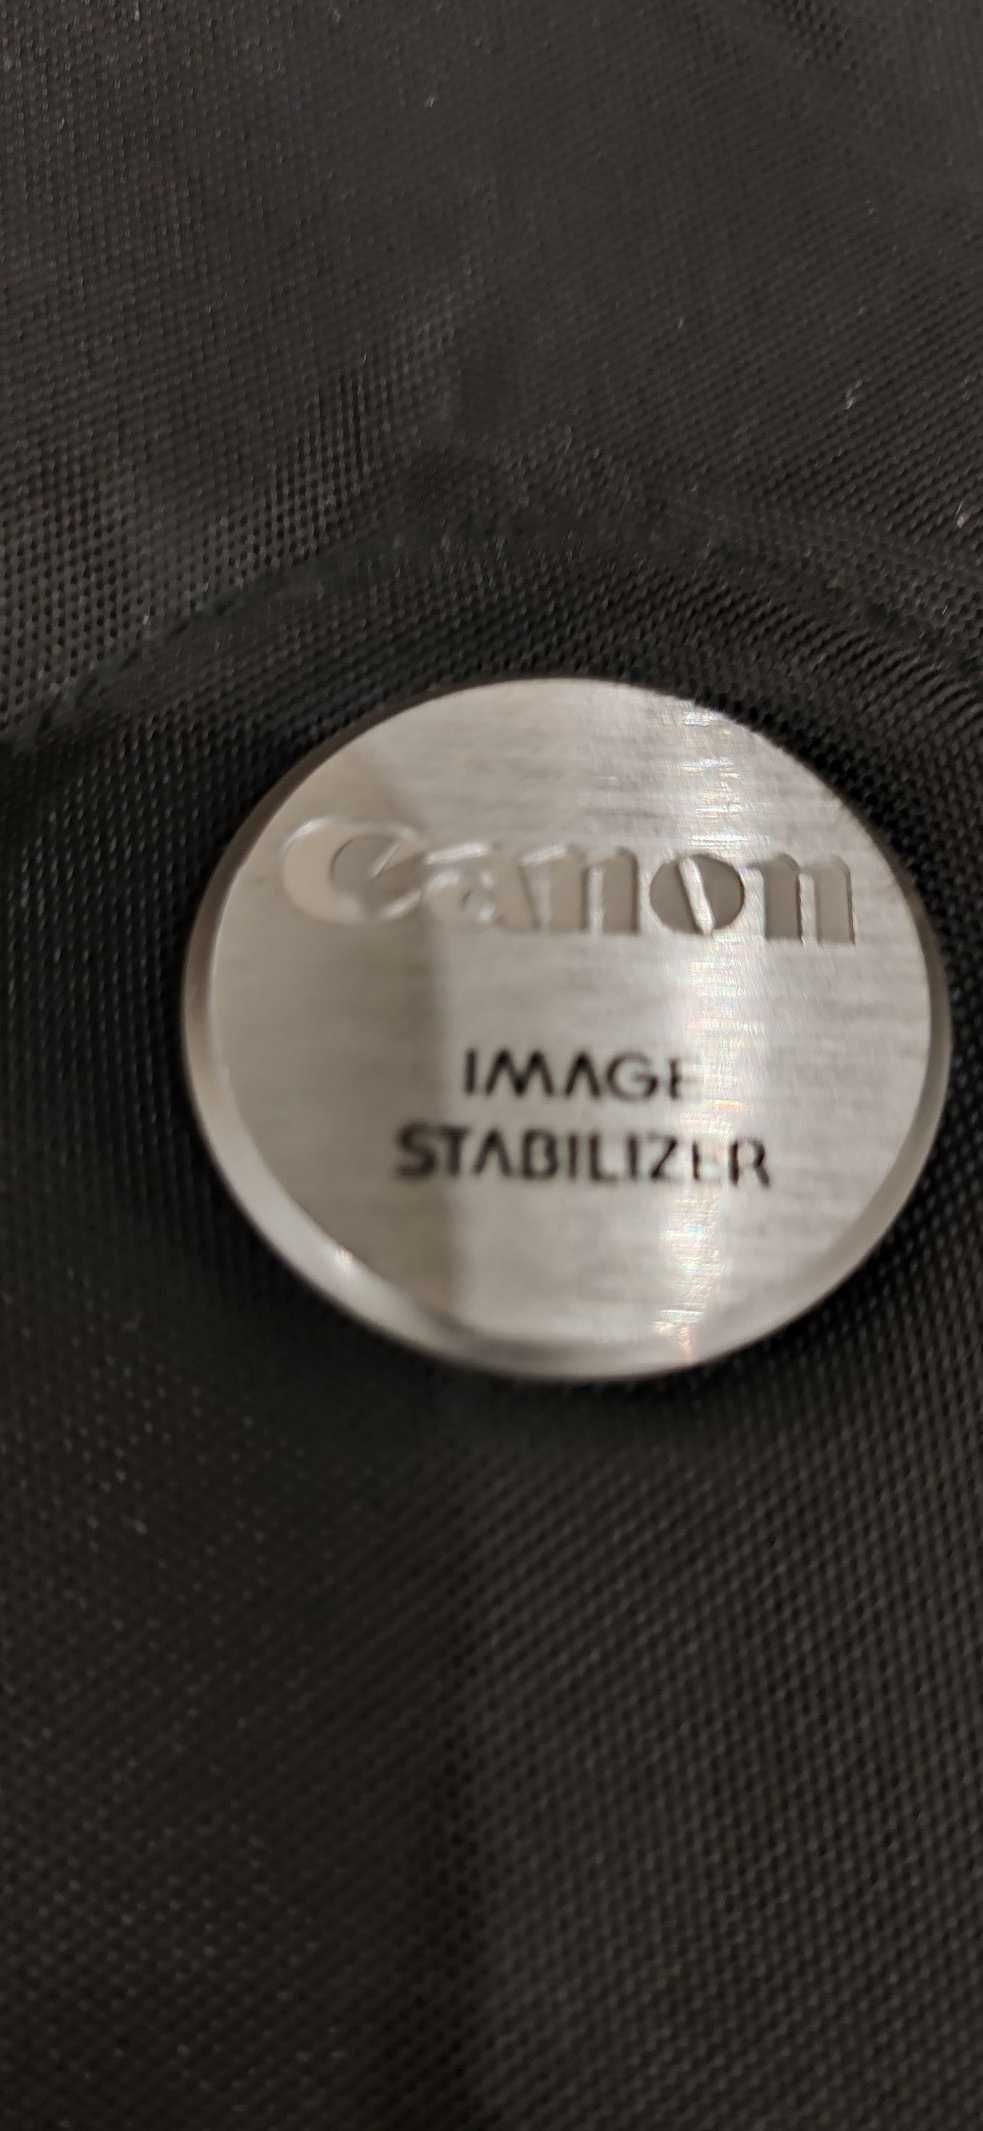 Новый бинокль Canon 12x36 IS II 5" со стабилизатором!